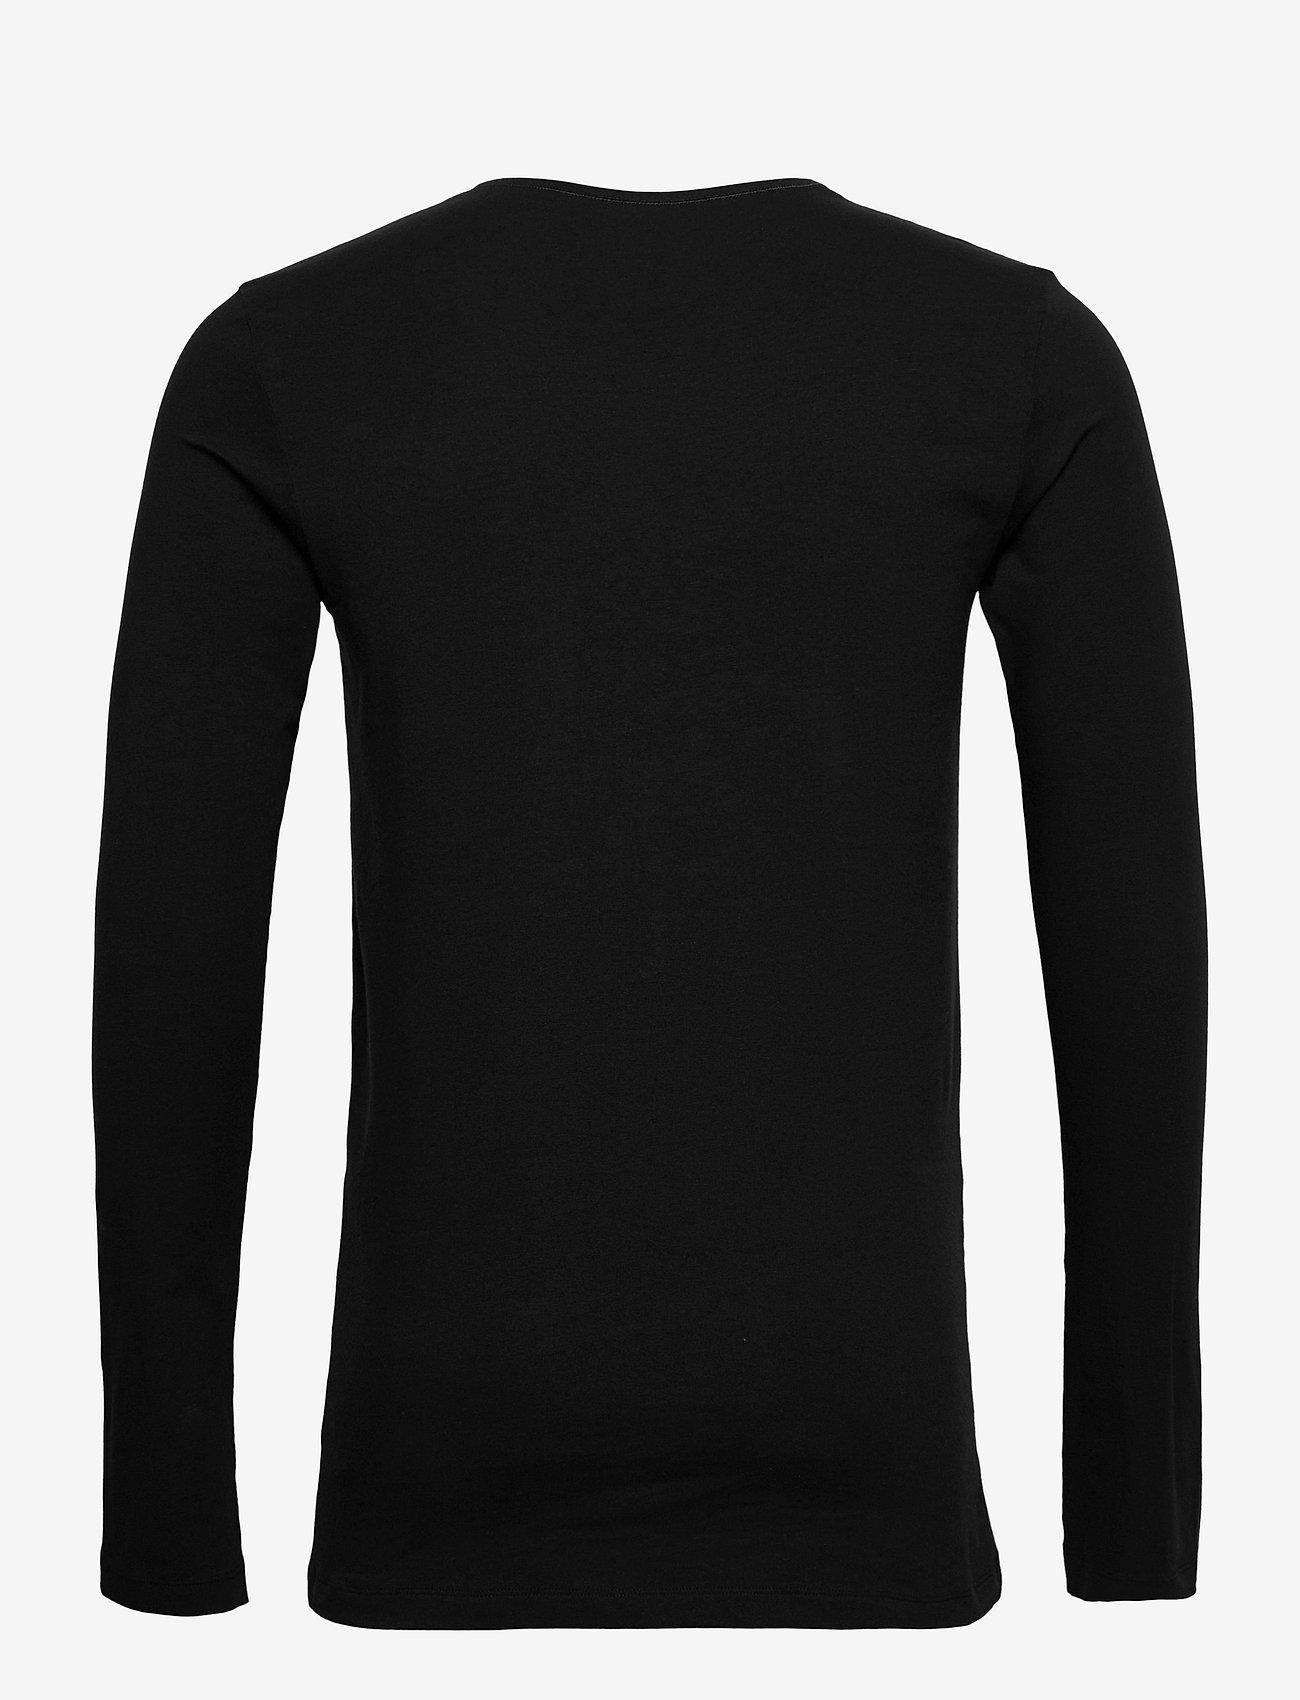 Schiesser - Shirt 1/1 - basic t-shirts - black - 1